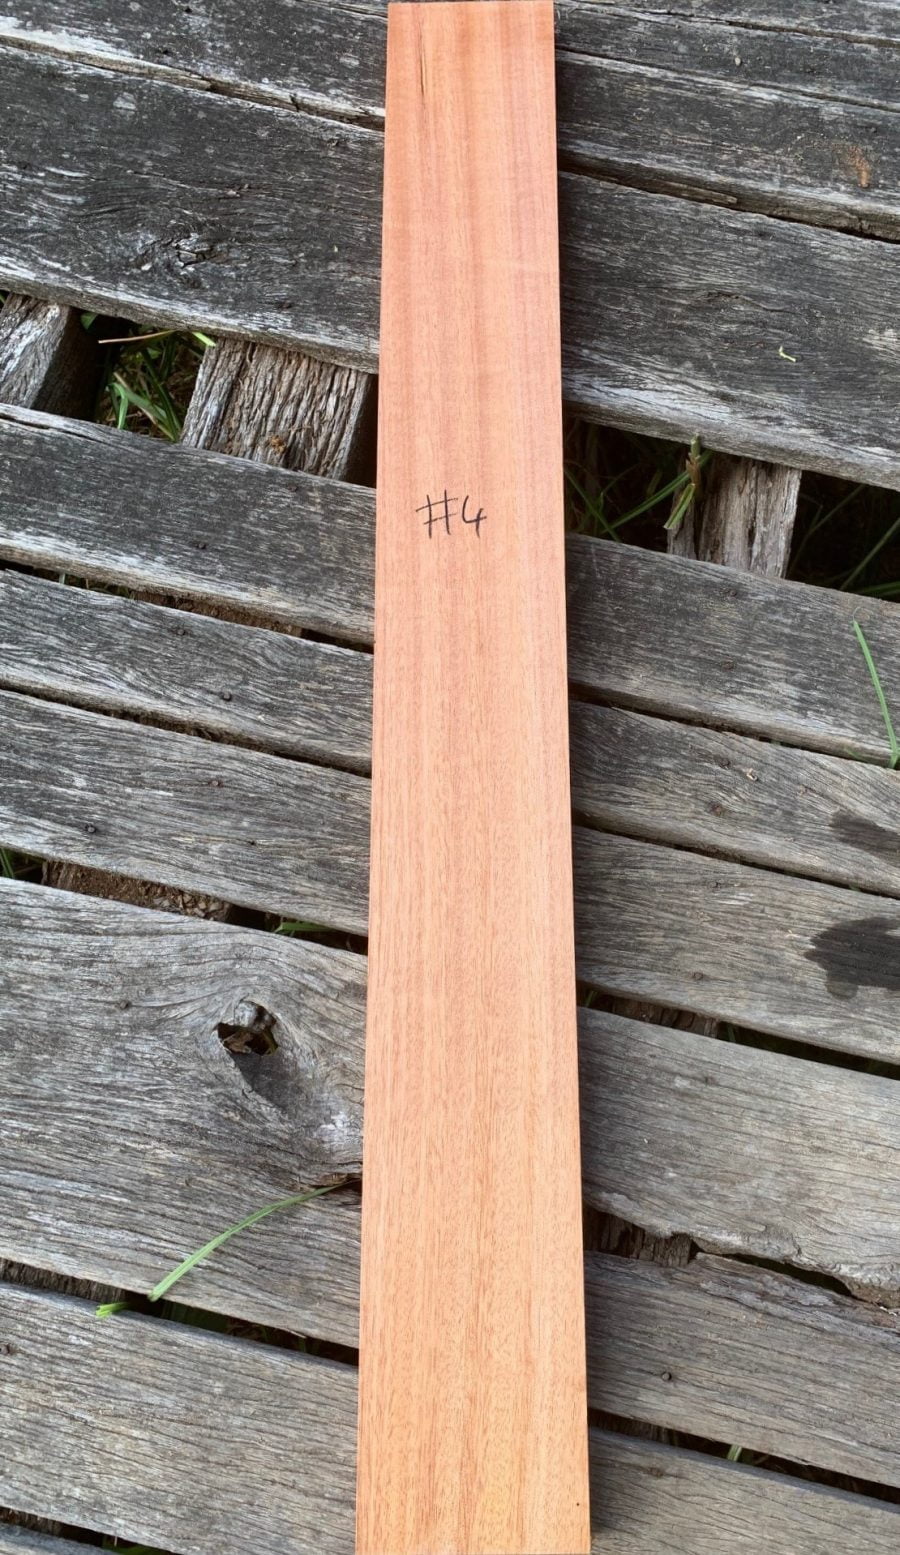 Quarter sawn instrument timber